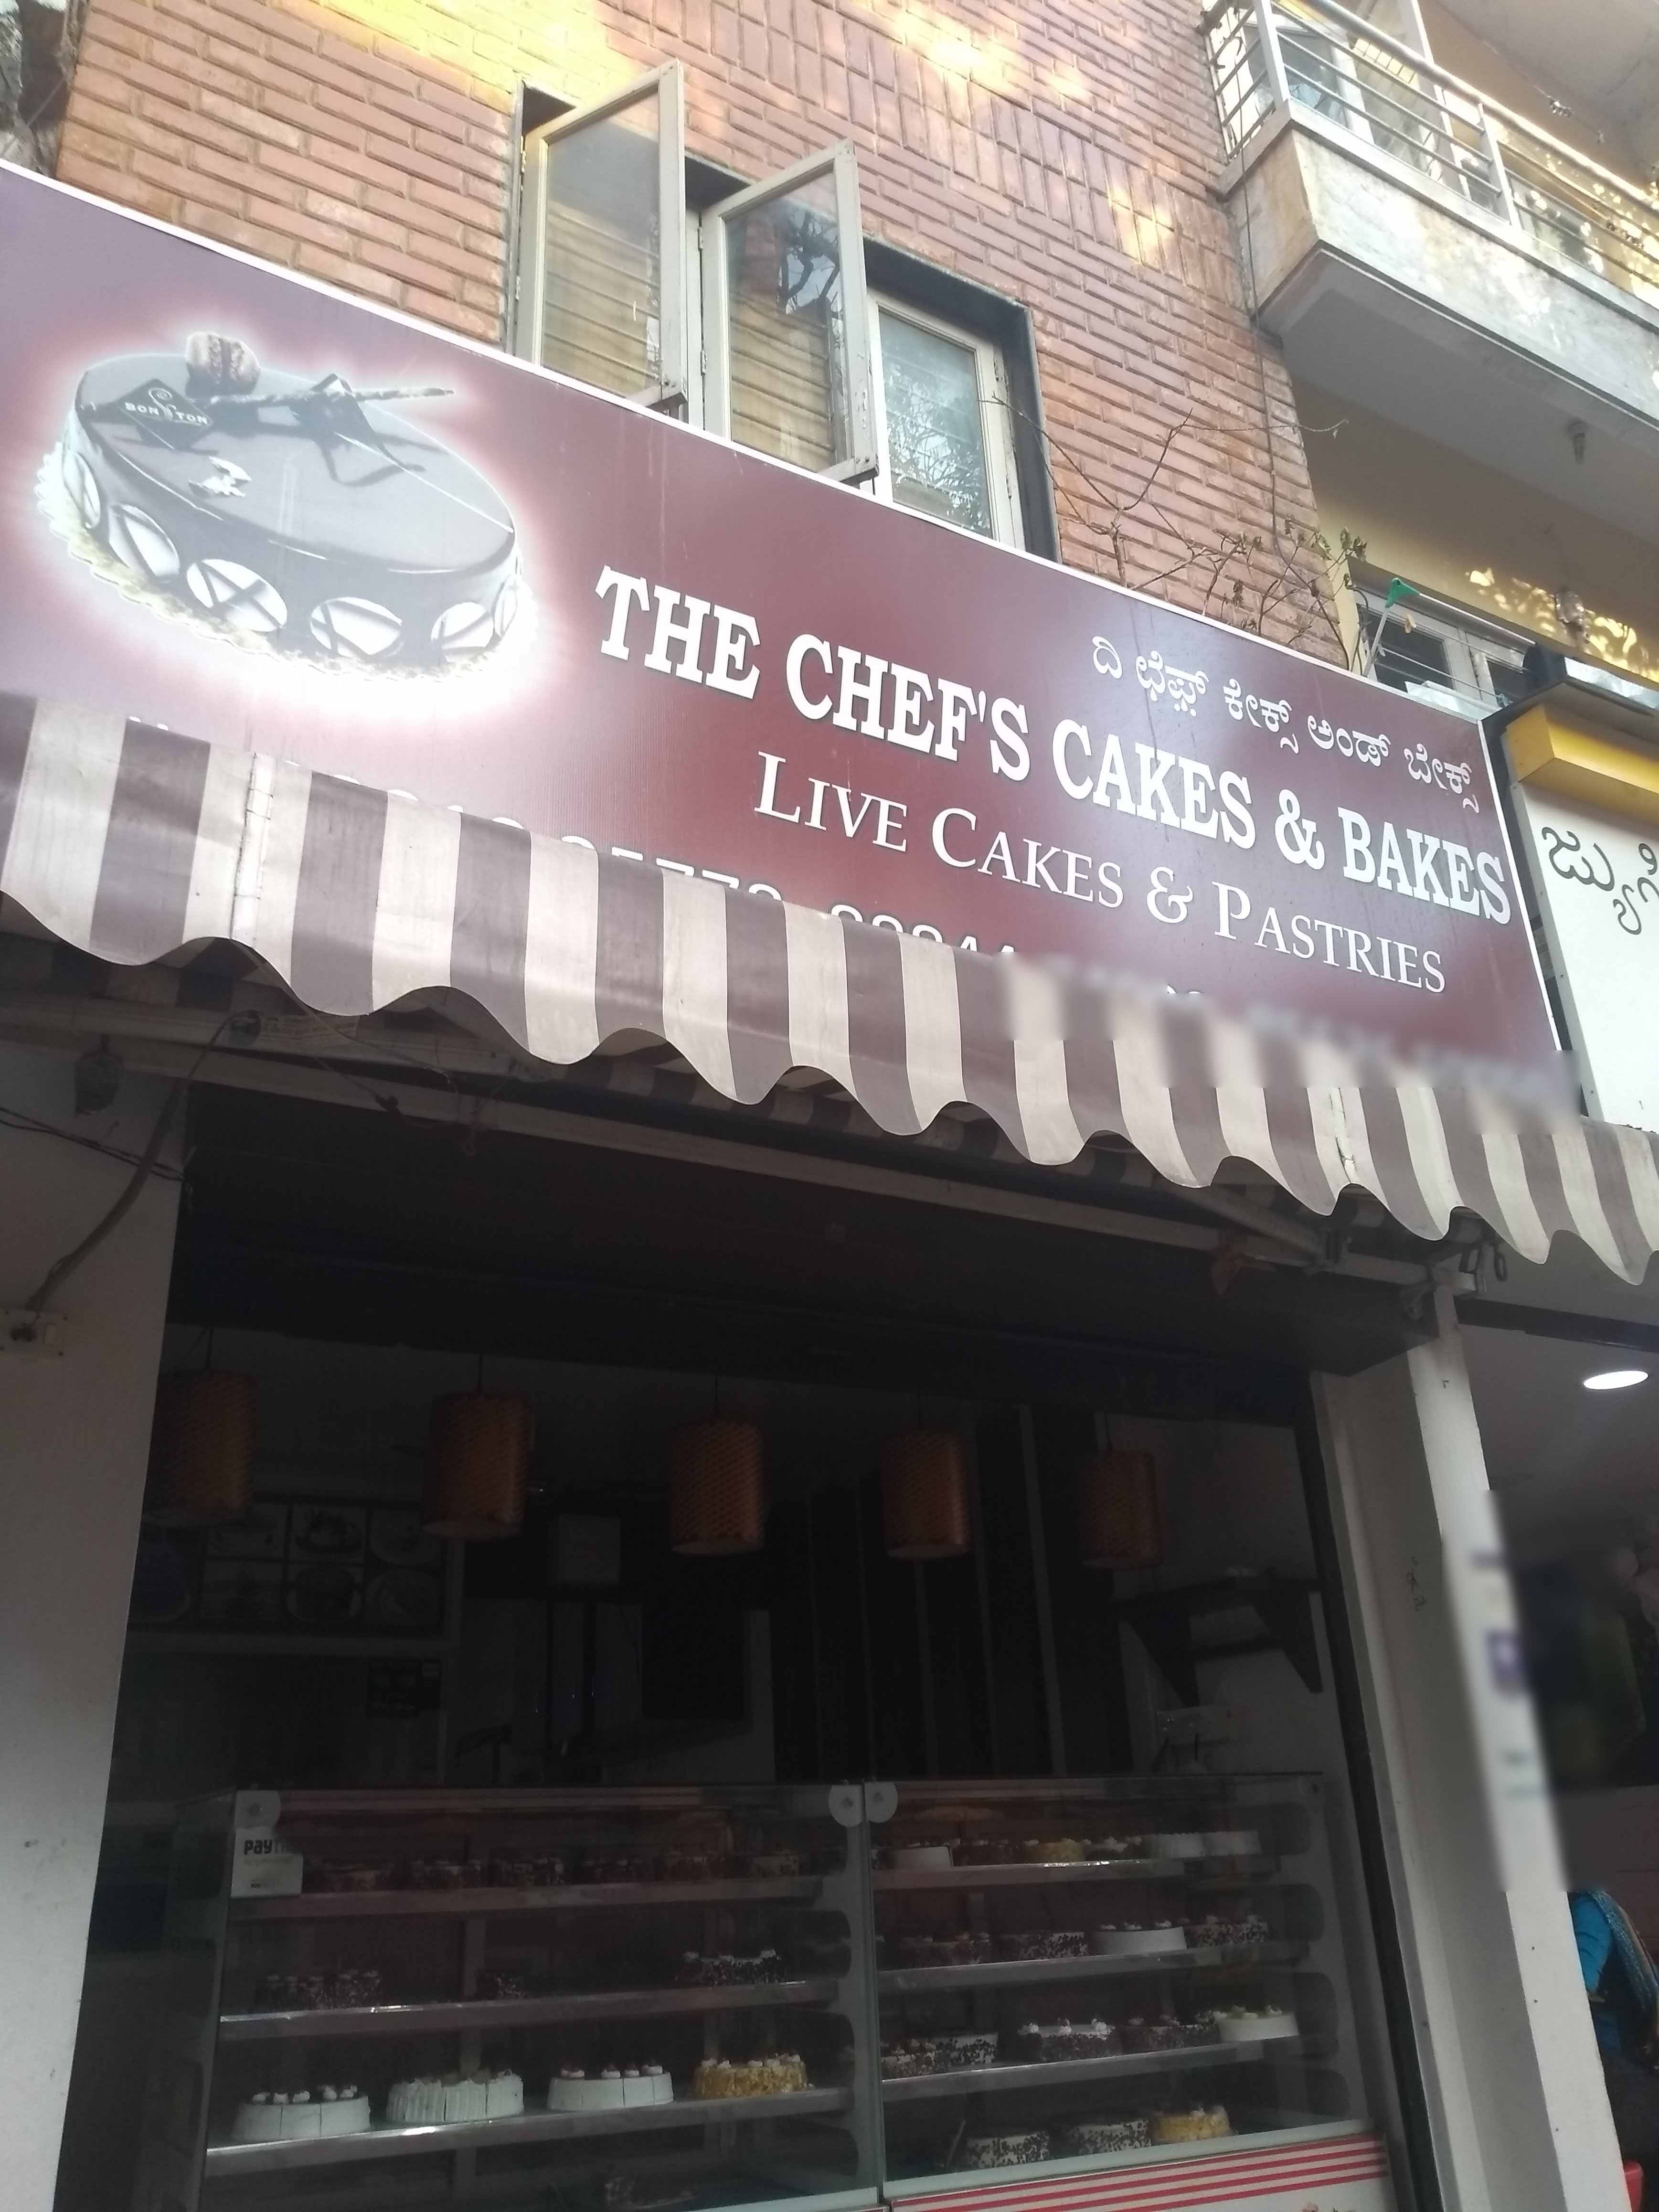 Cakes & Bakes in Durgapur - Best Cake Shops in Durgapur - Justdial